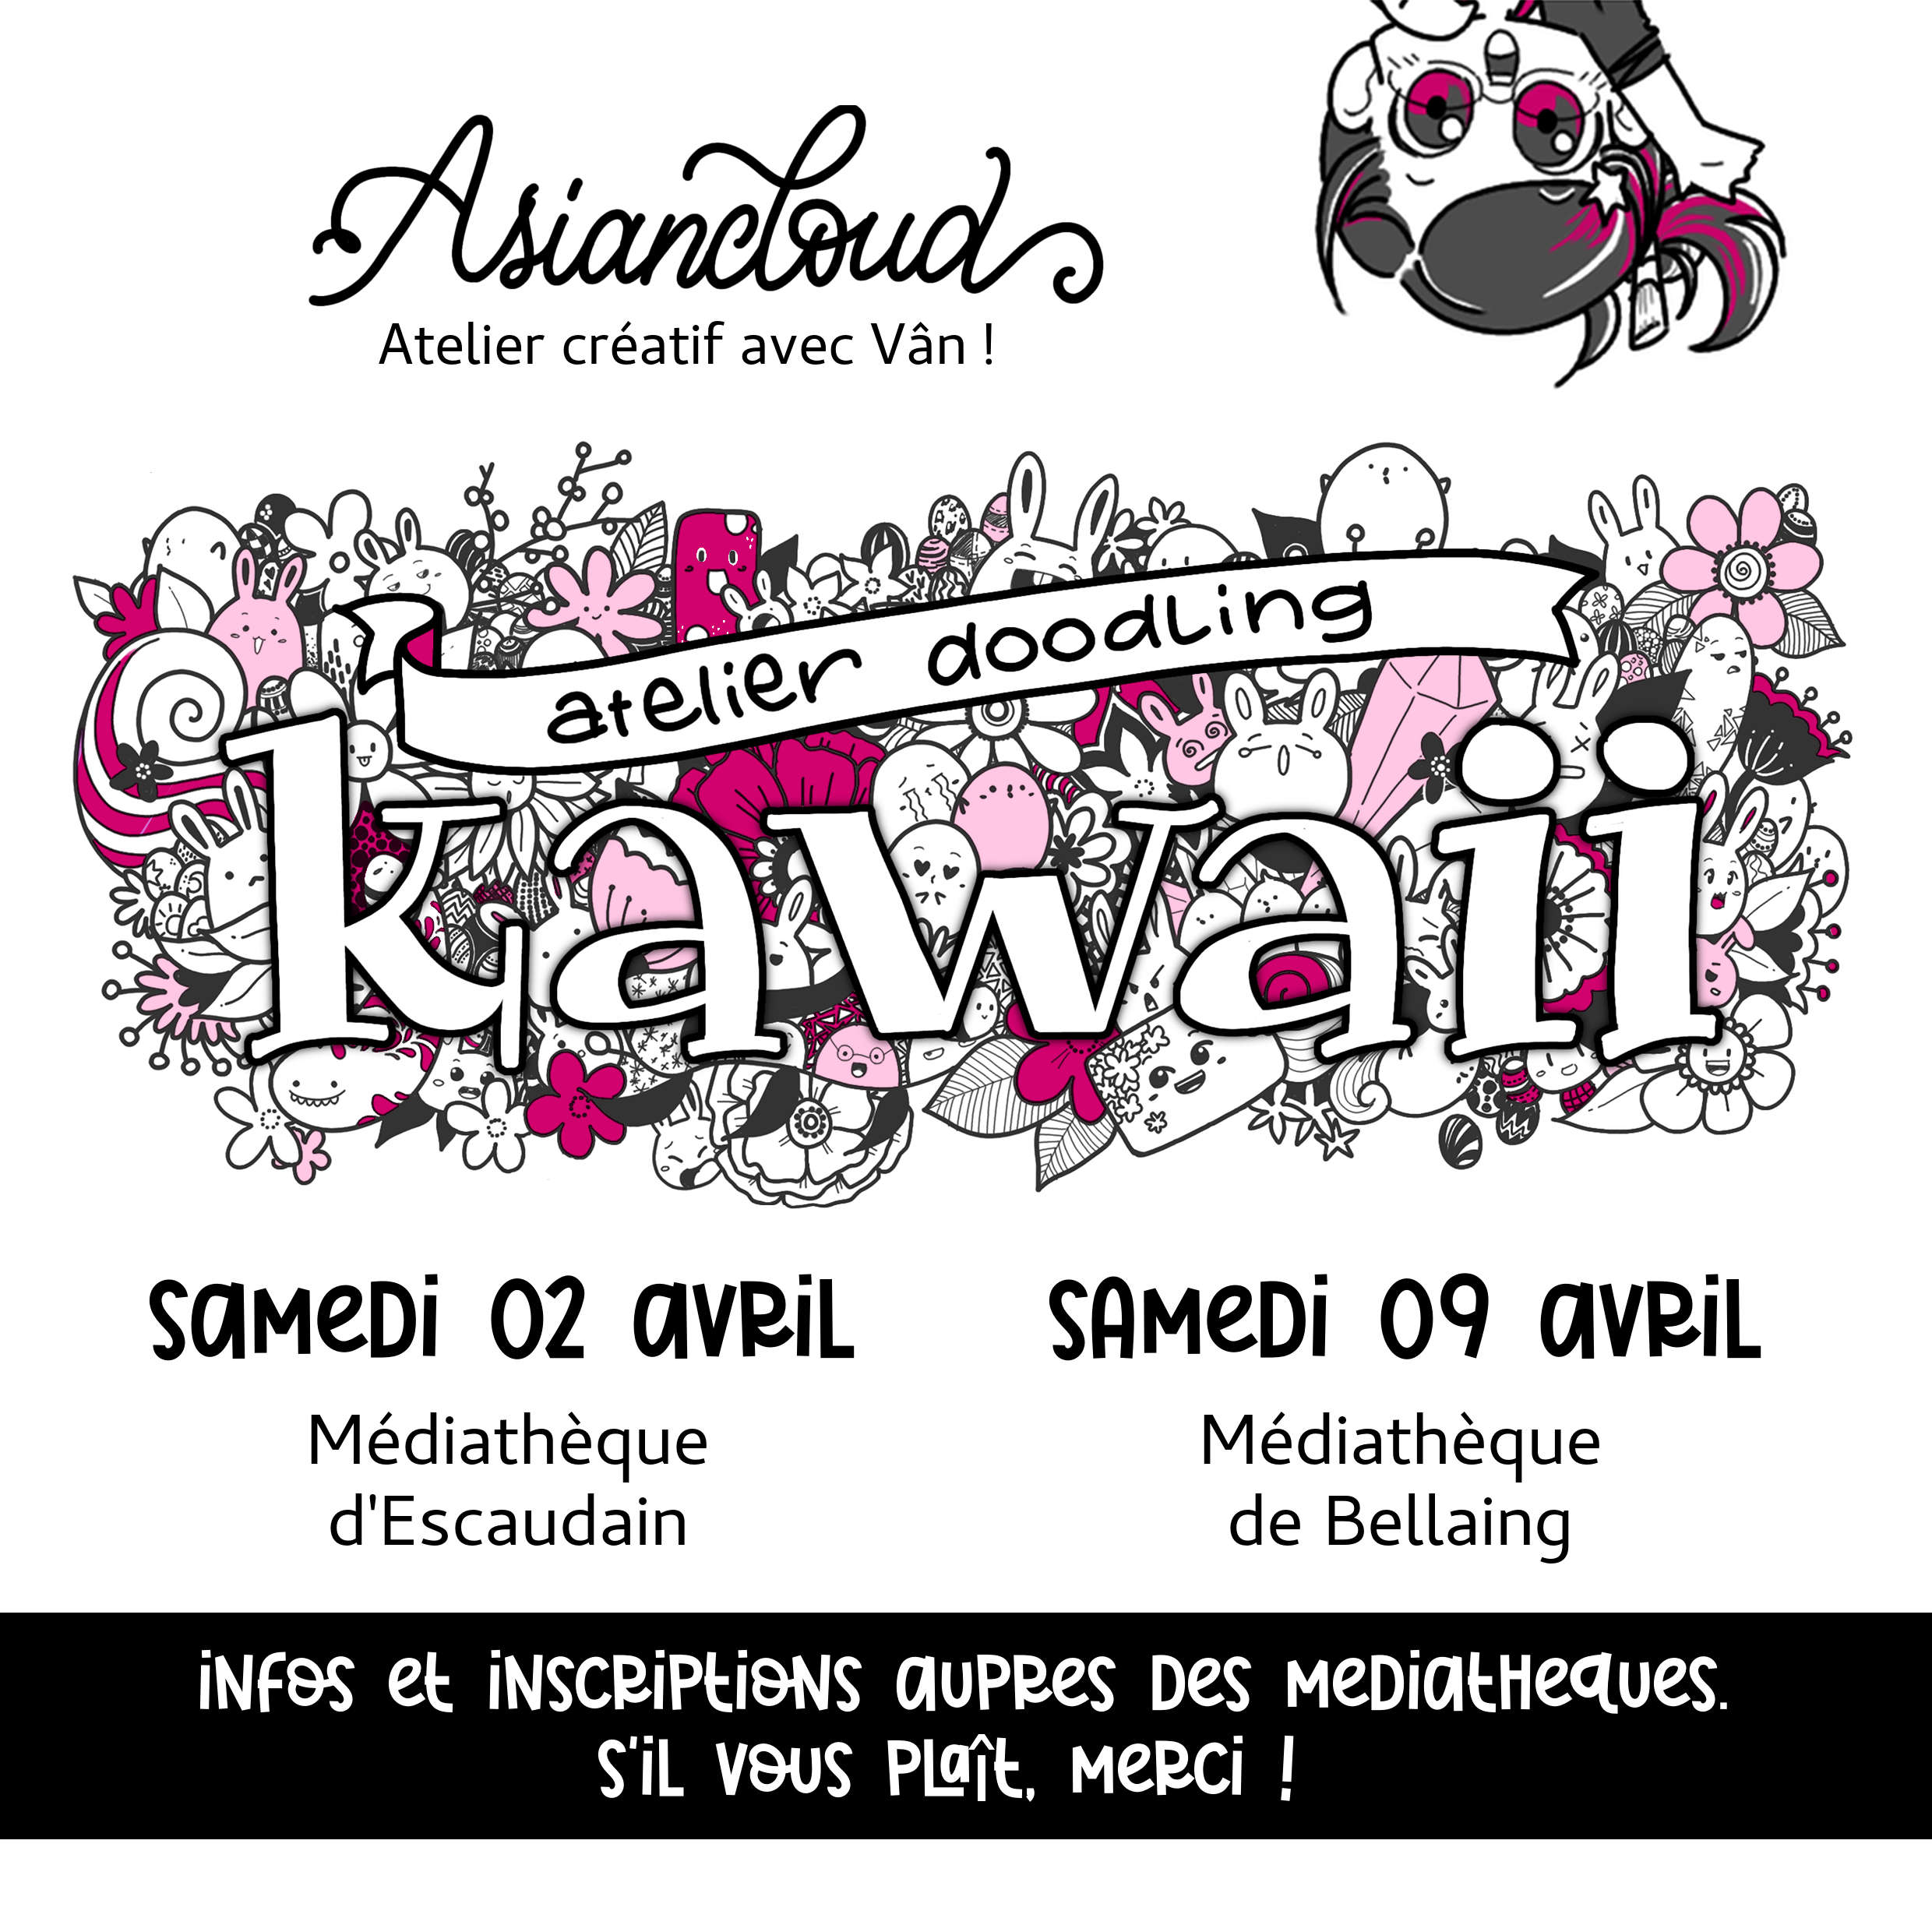 Atelier dessin manga gratuit, doodling kawaii à la médiathèque d'Escaudain le samedi 02 avril 2022 et à la médiathèque de Bellaing le samedi 09 avril 2022